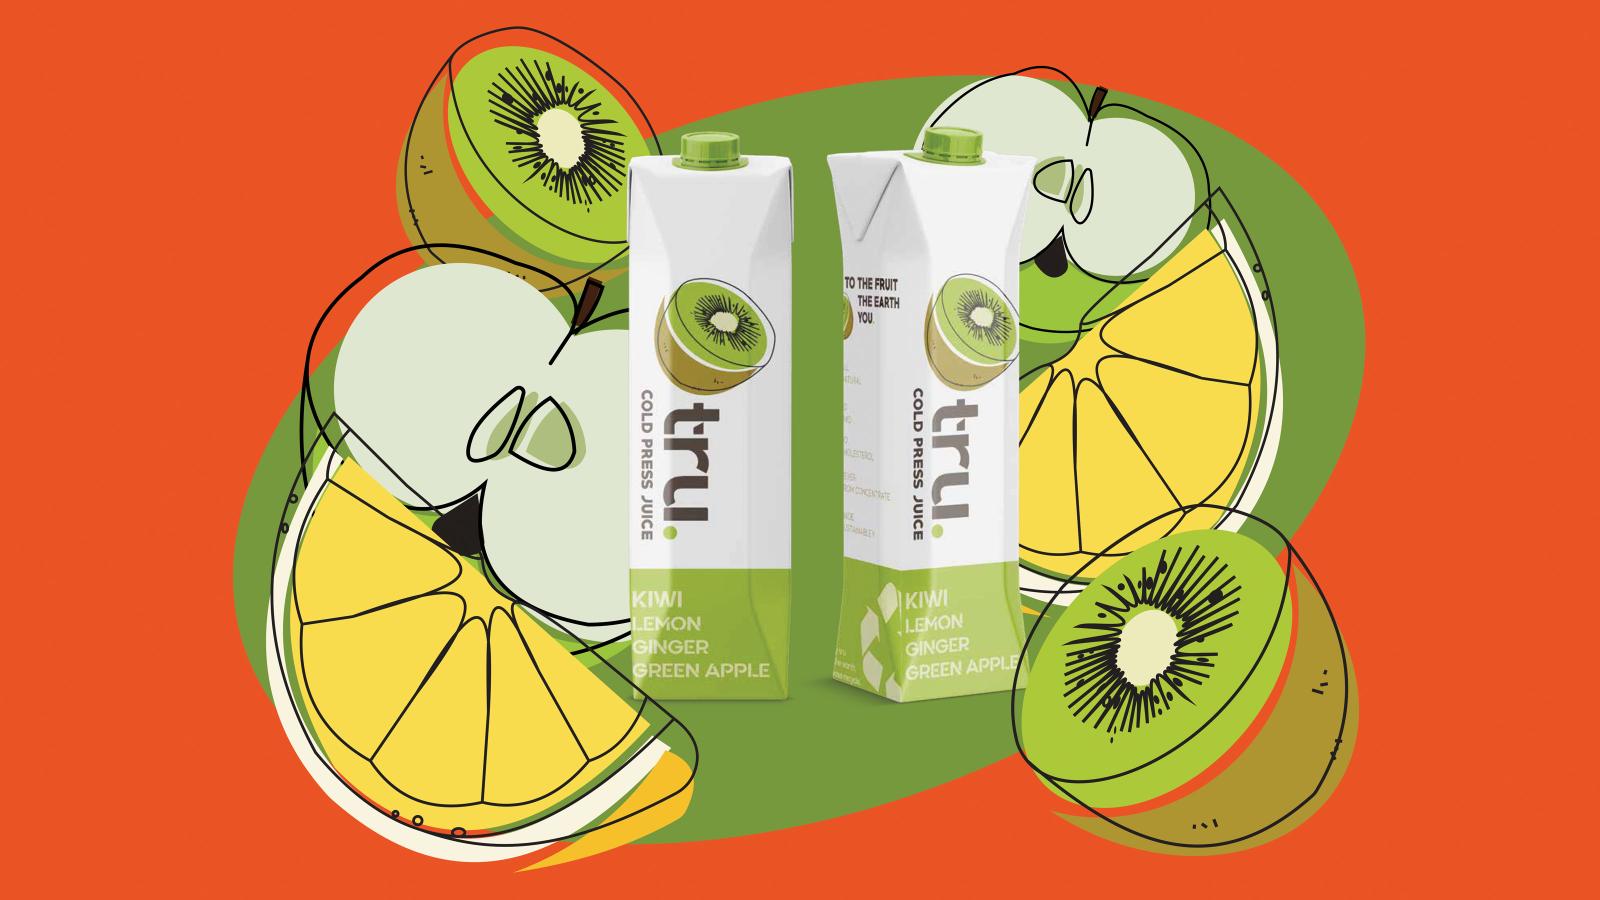 Tru Juice Packaging Design | Juice bottles surrounded by corresponding sliced fruit flavors